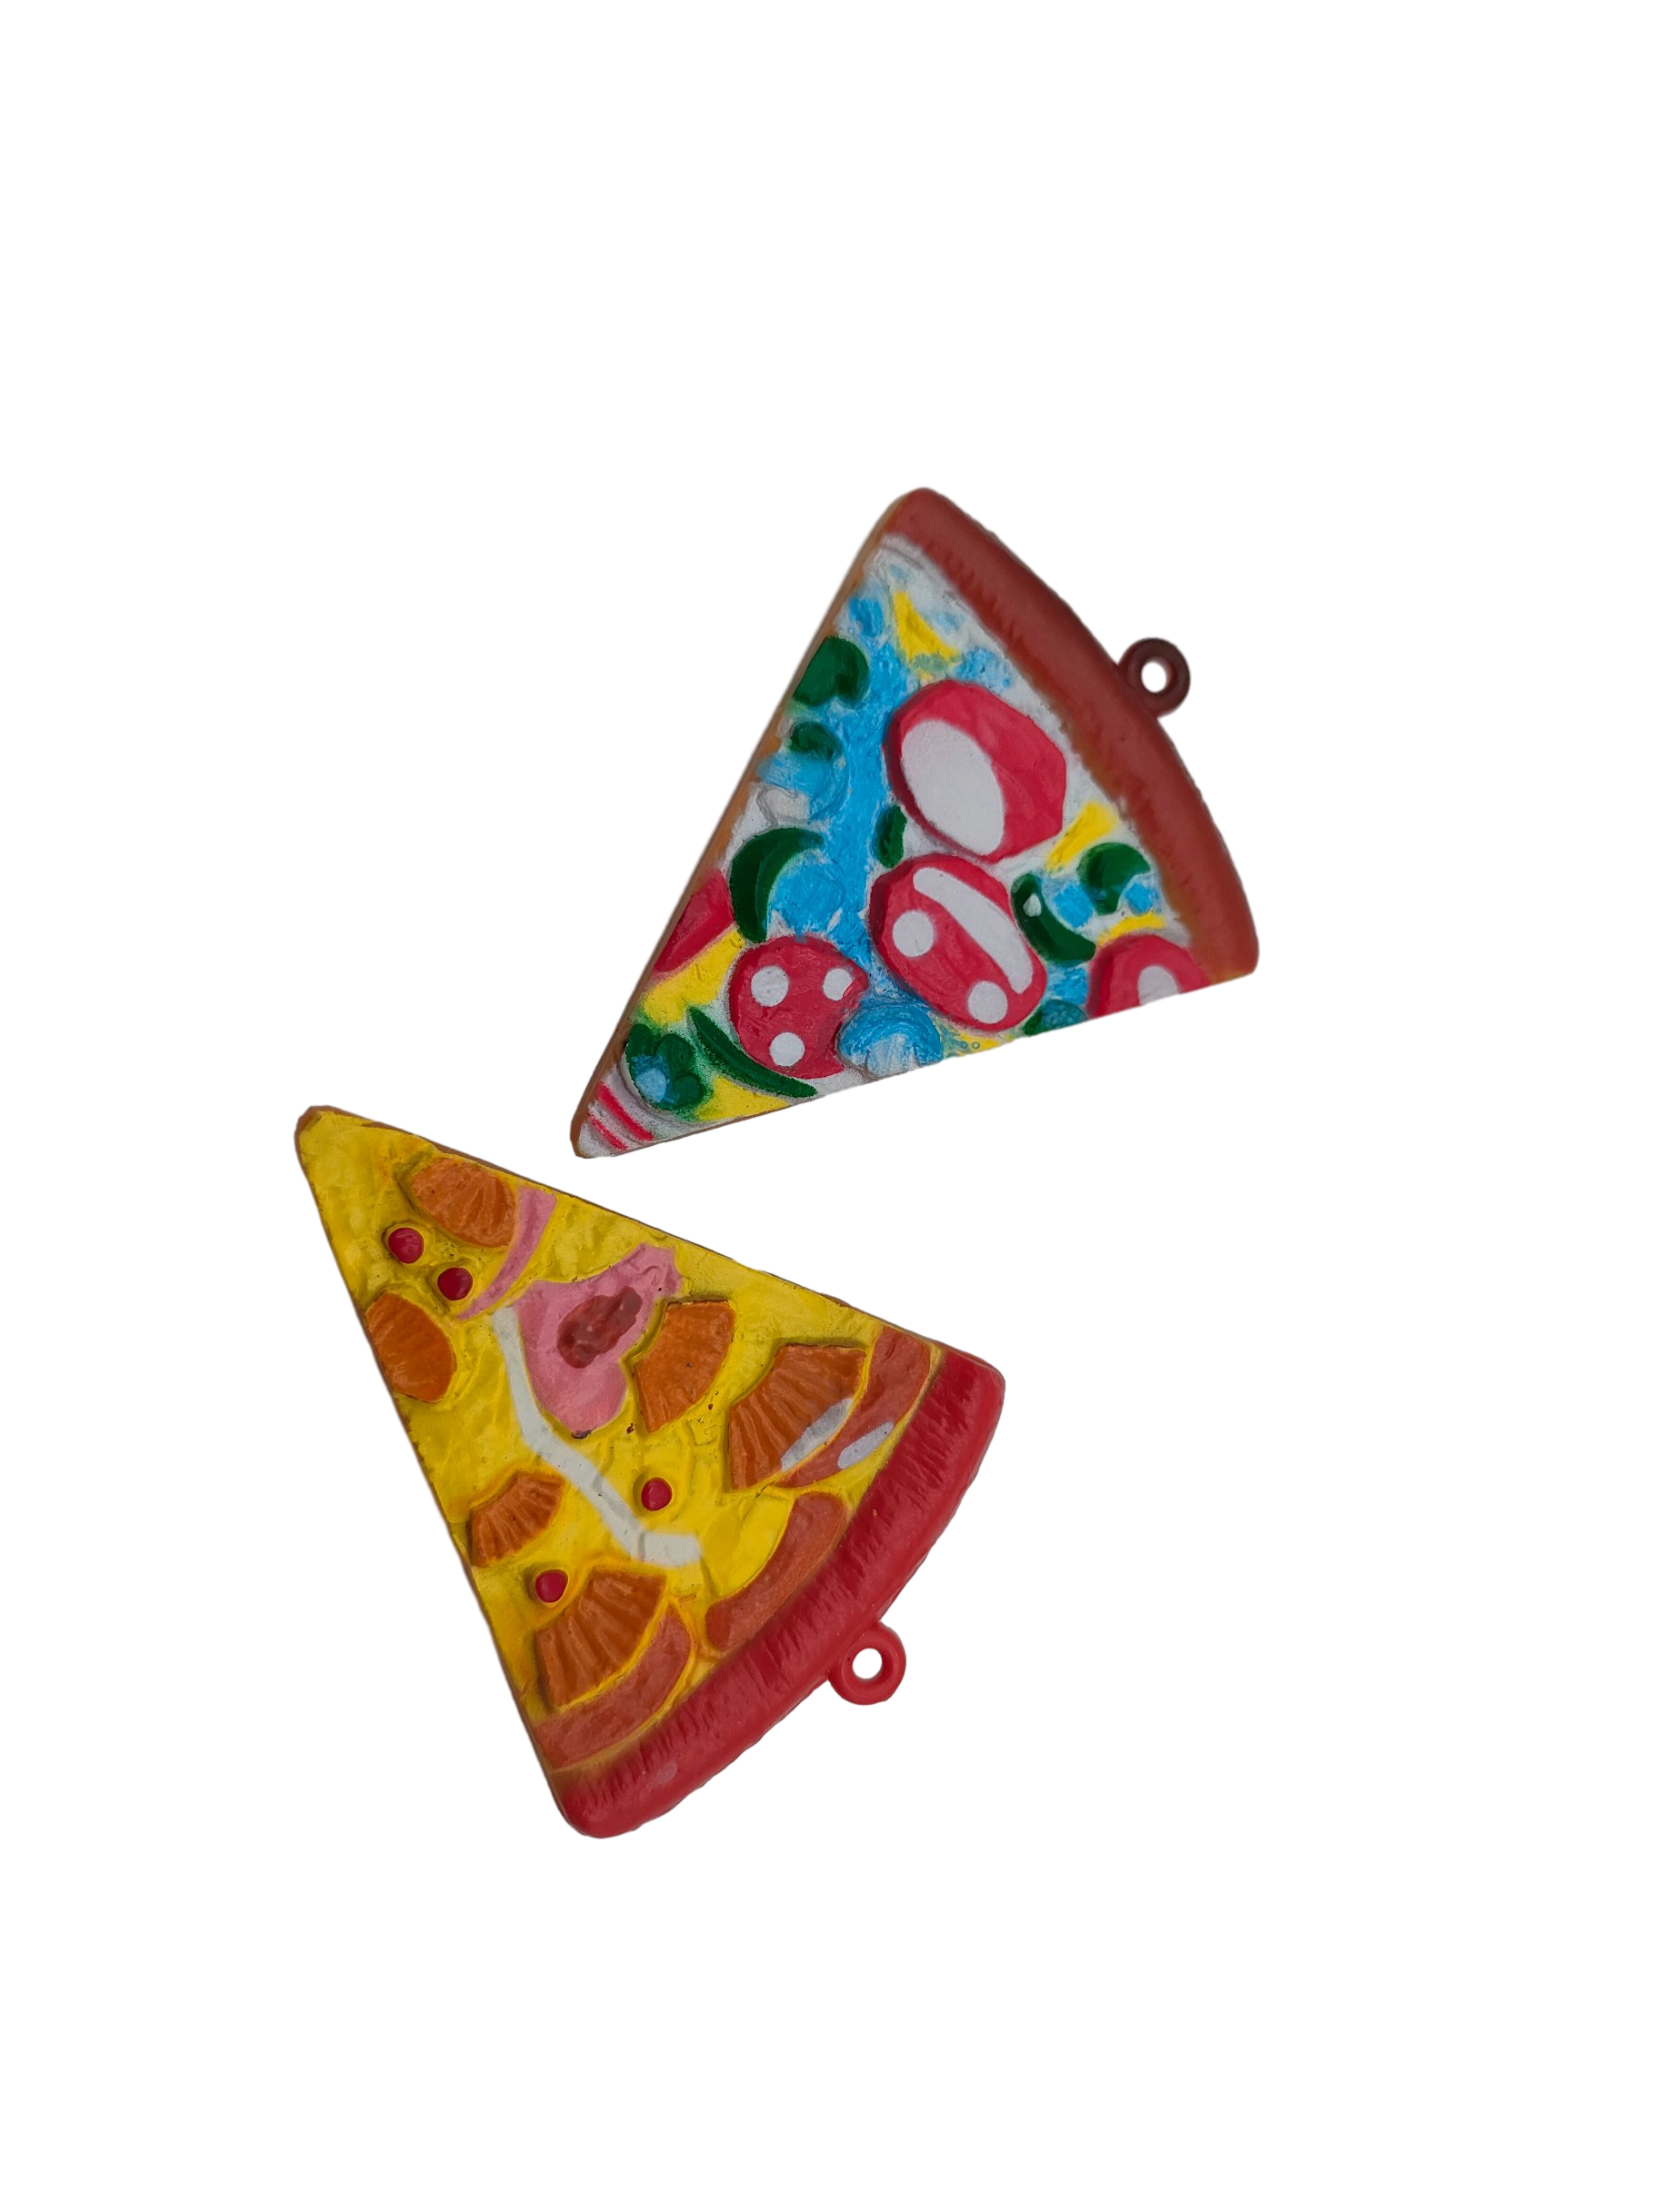 PVC Pizza Thin Pancake Keychain Accessory Education Figure Toys